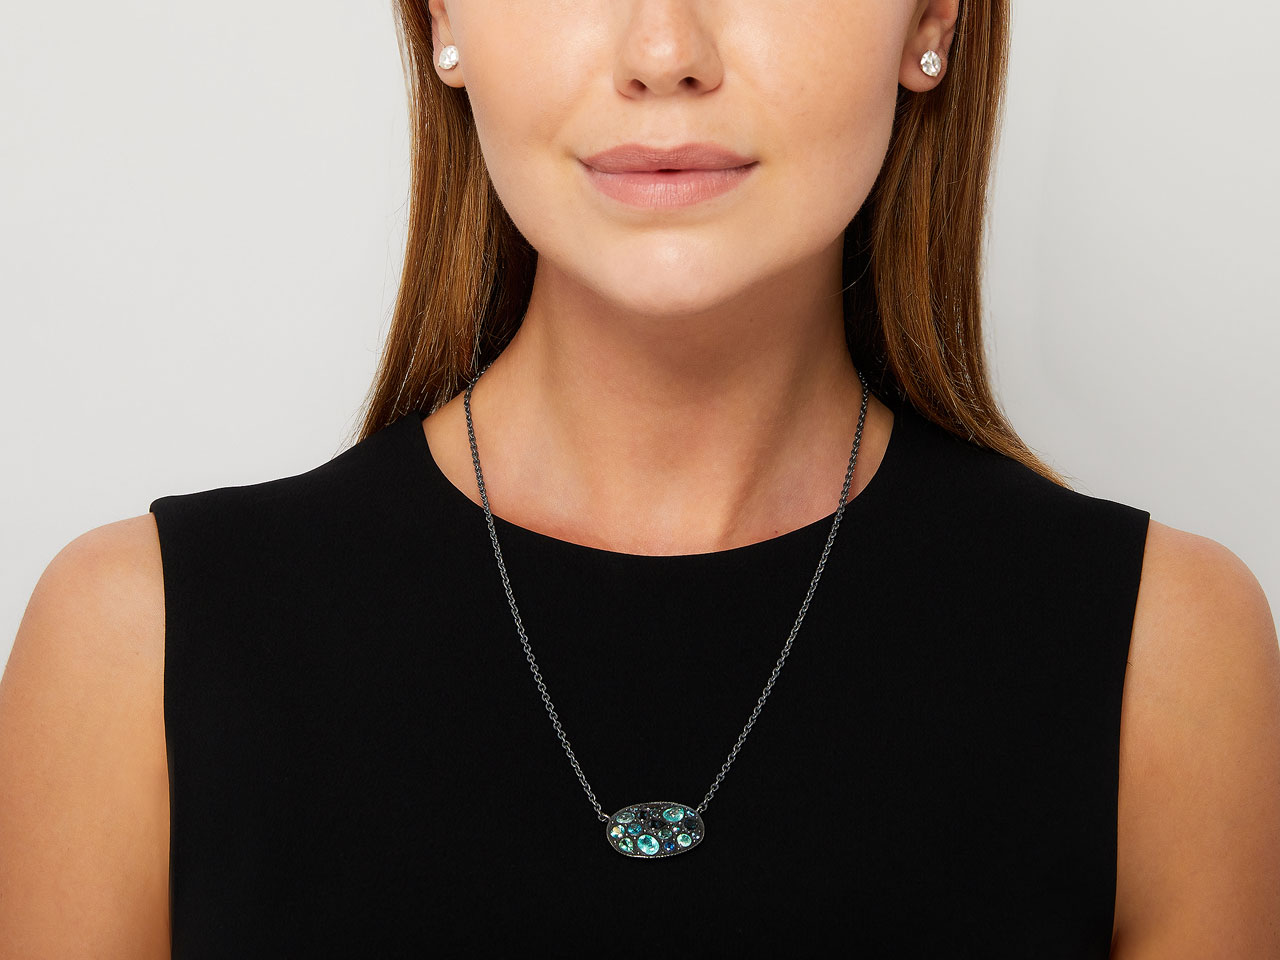 Gemstone 'Sara' Necklace in 18K Blackened Silver, by Yossi Harari